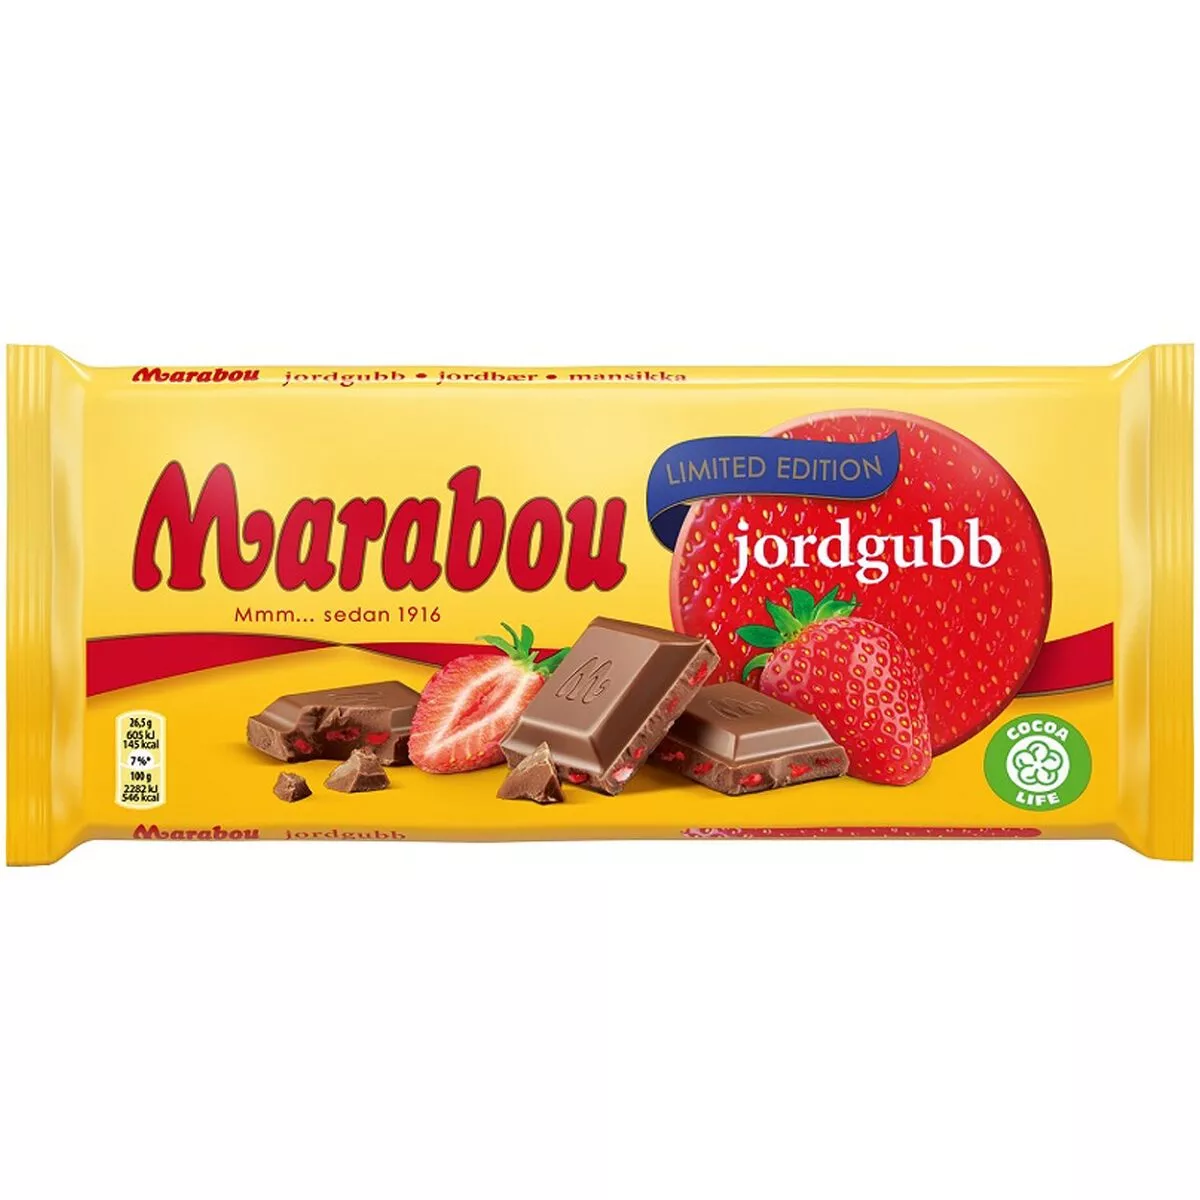 Marabou Jordgubb / Erdbeer - limited Edition (185g) 1